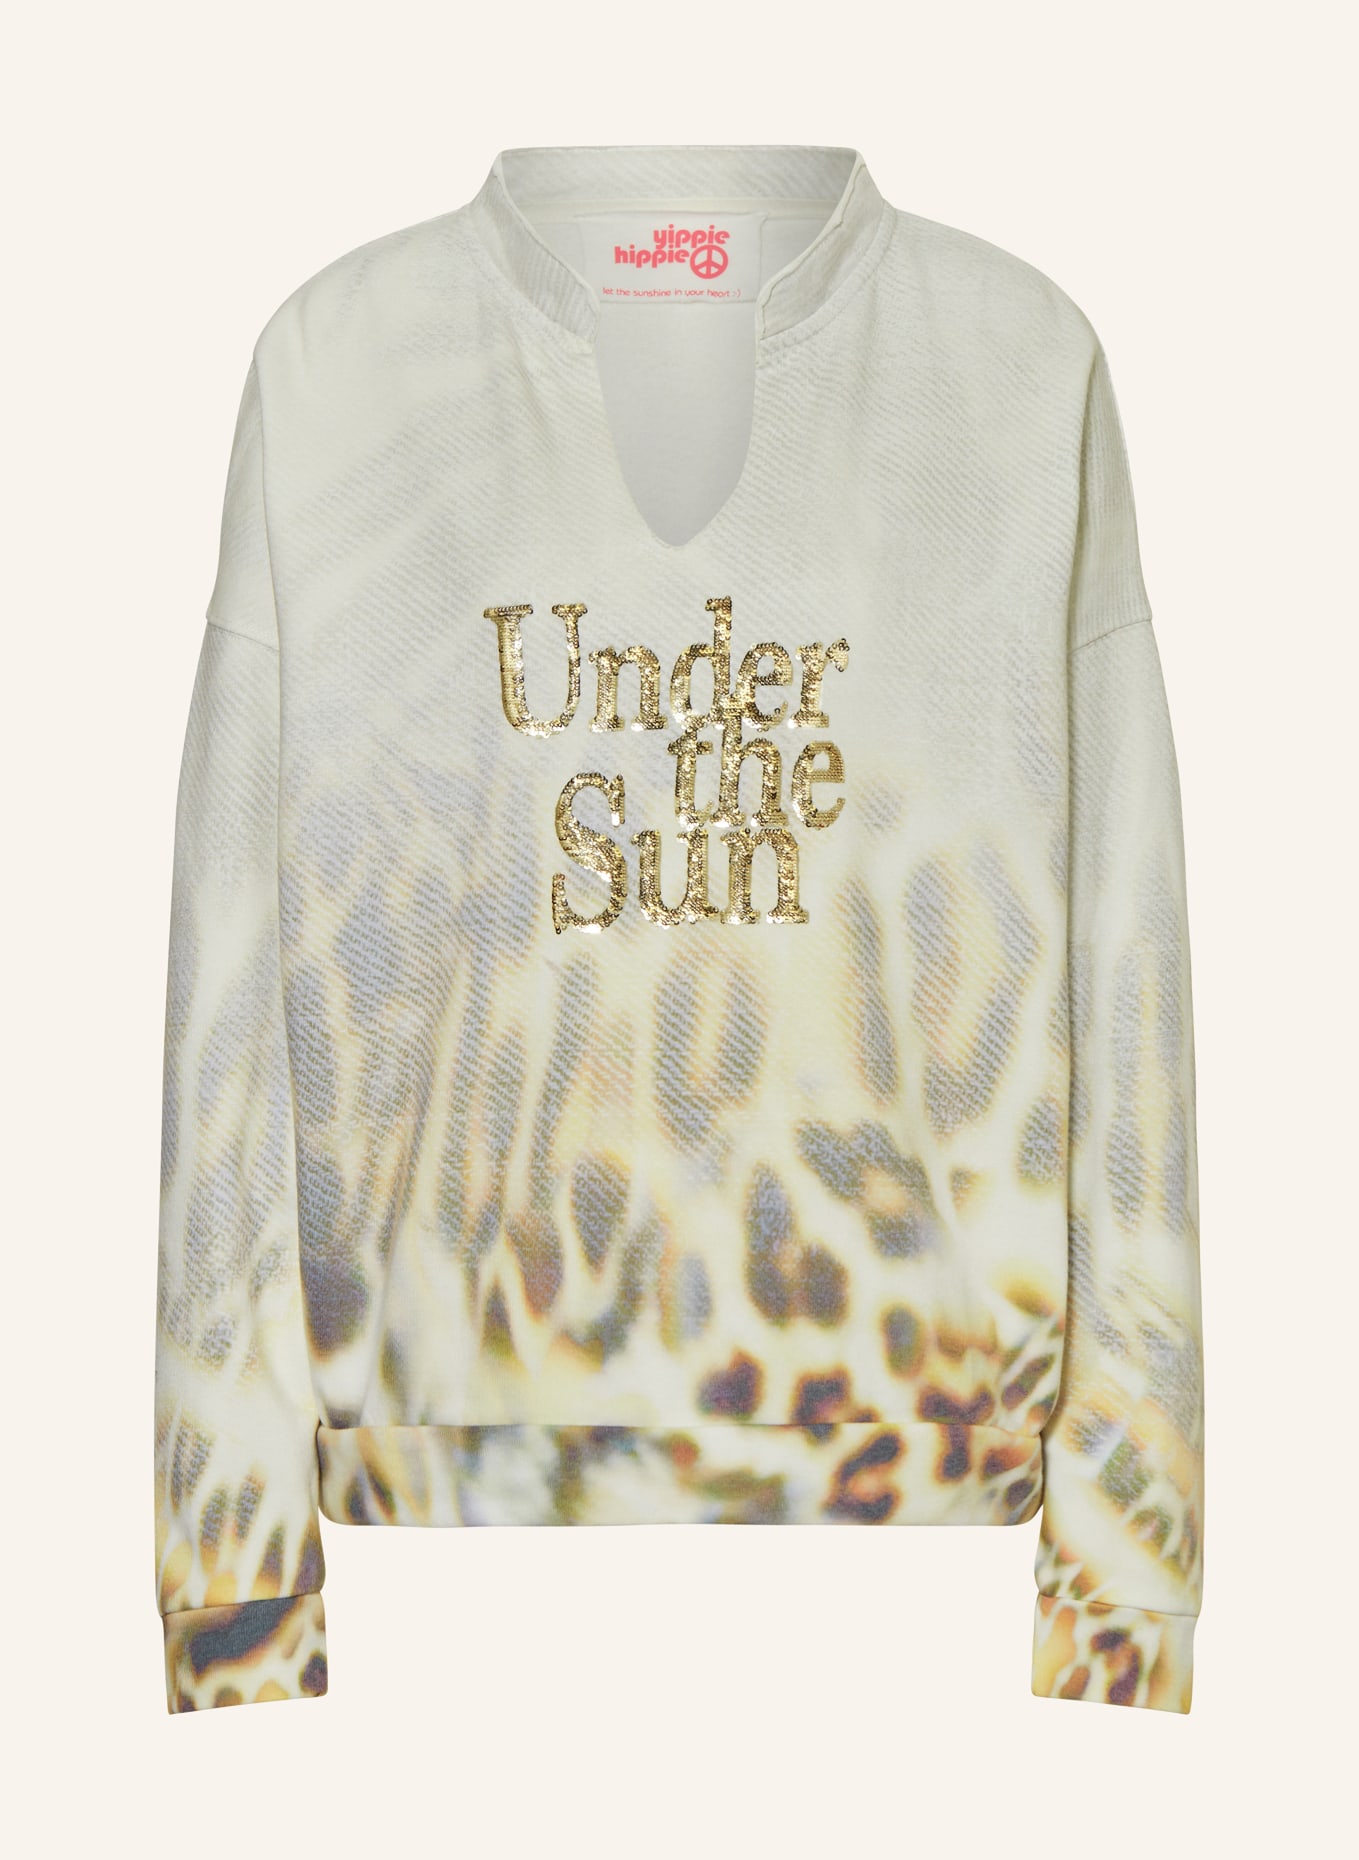 yippie hippie Sweatshirt with sequins, Color: LIGHT GRAY/ LIGHT YELLOW/ DARK GRAY (Image 1)